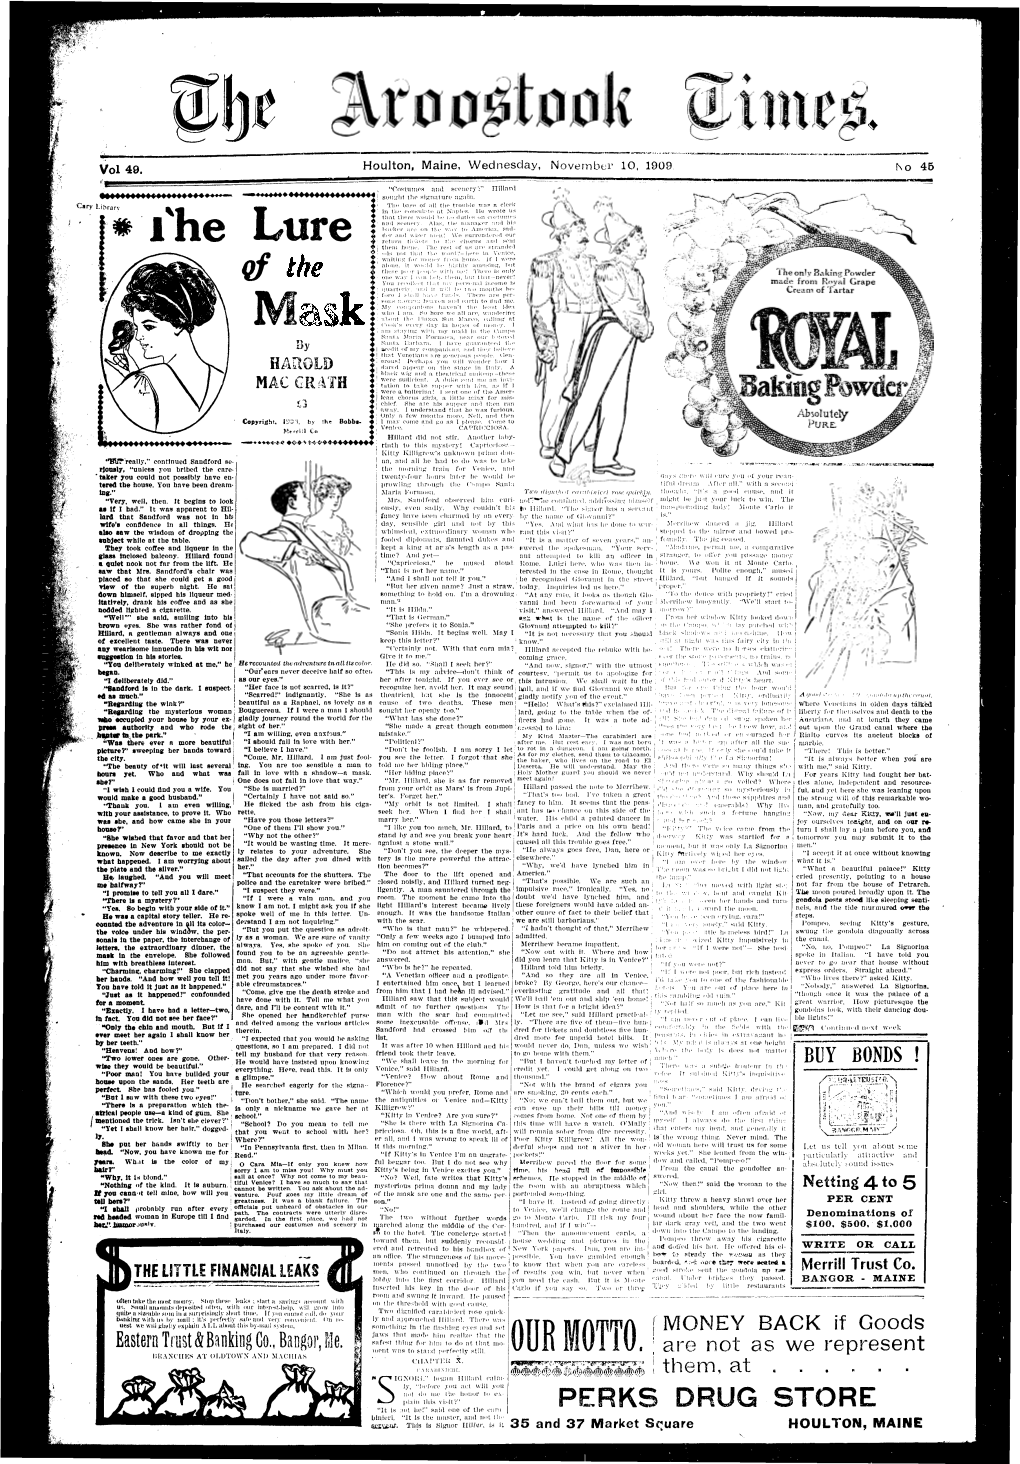 The Aroostook Times, November 10, 1909